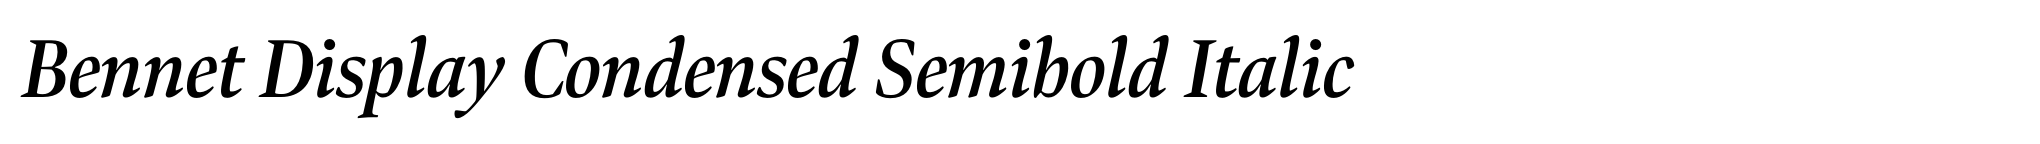 Bennet Display Condensed Semibold Italic image